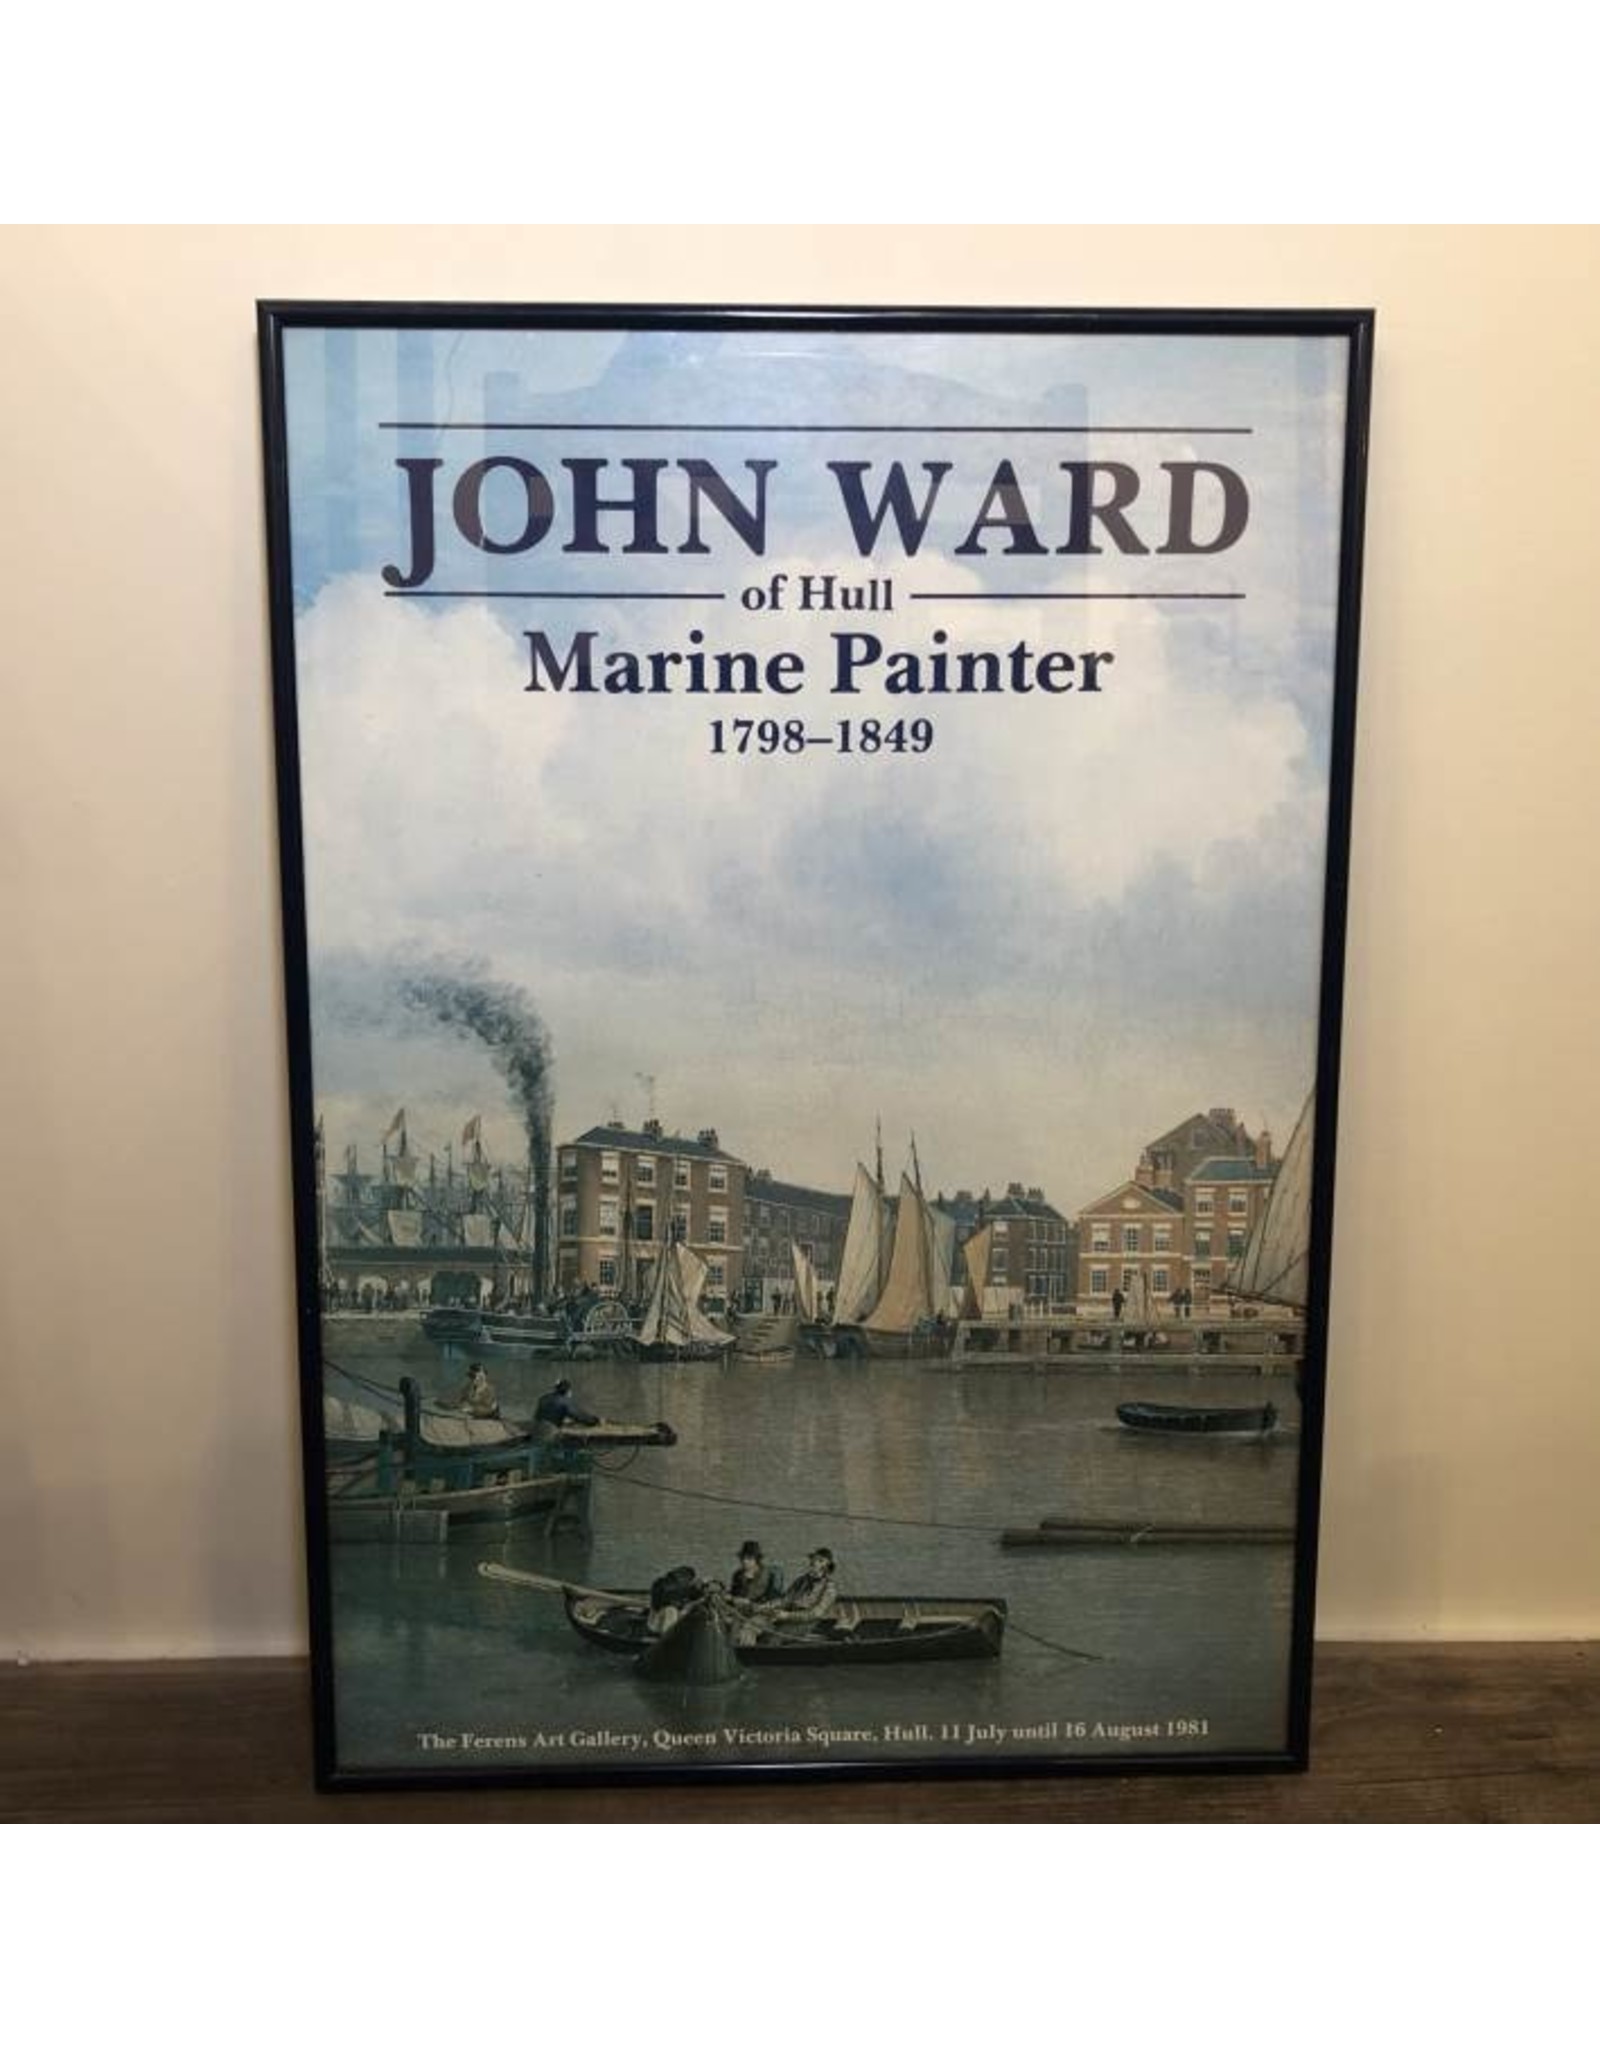 Art - framed poster John Ward art show